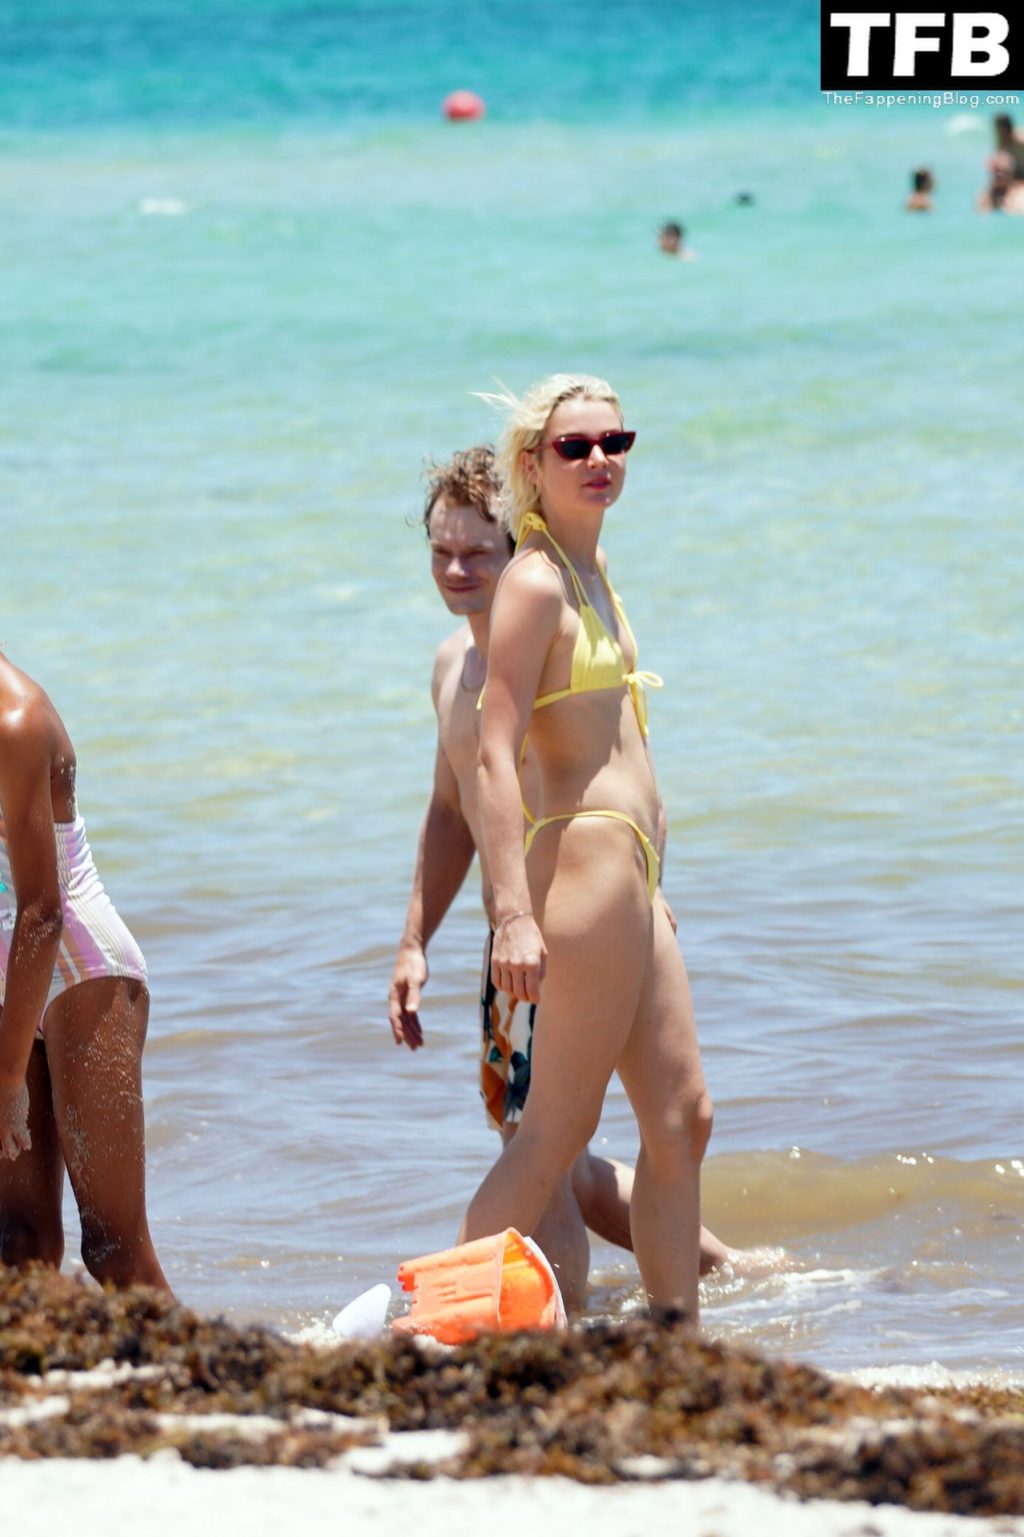 Allie Teilz Shows Off Her Sexy Figure in a Yellow Bikini (140 Photos)